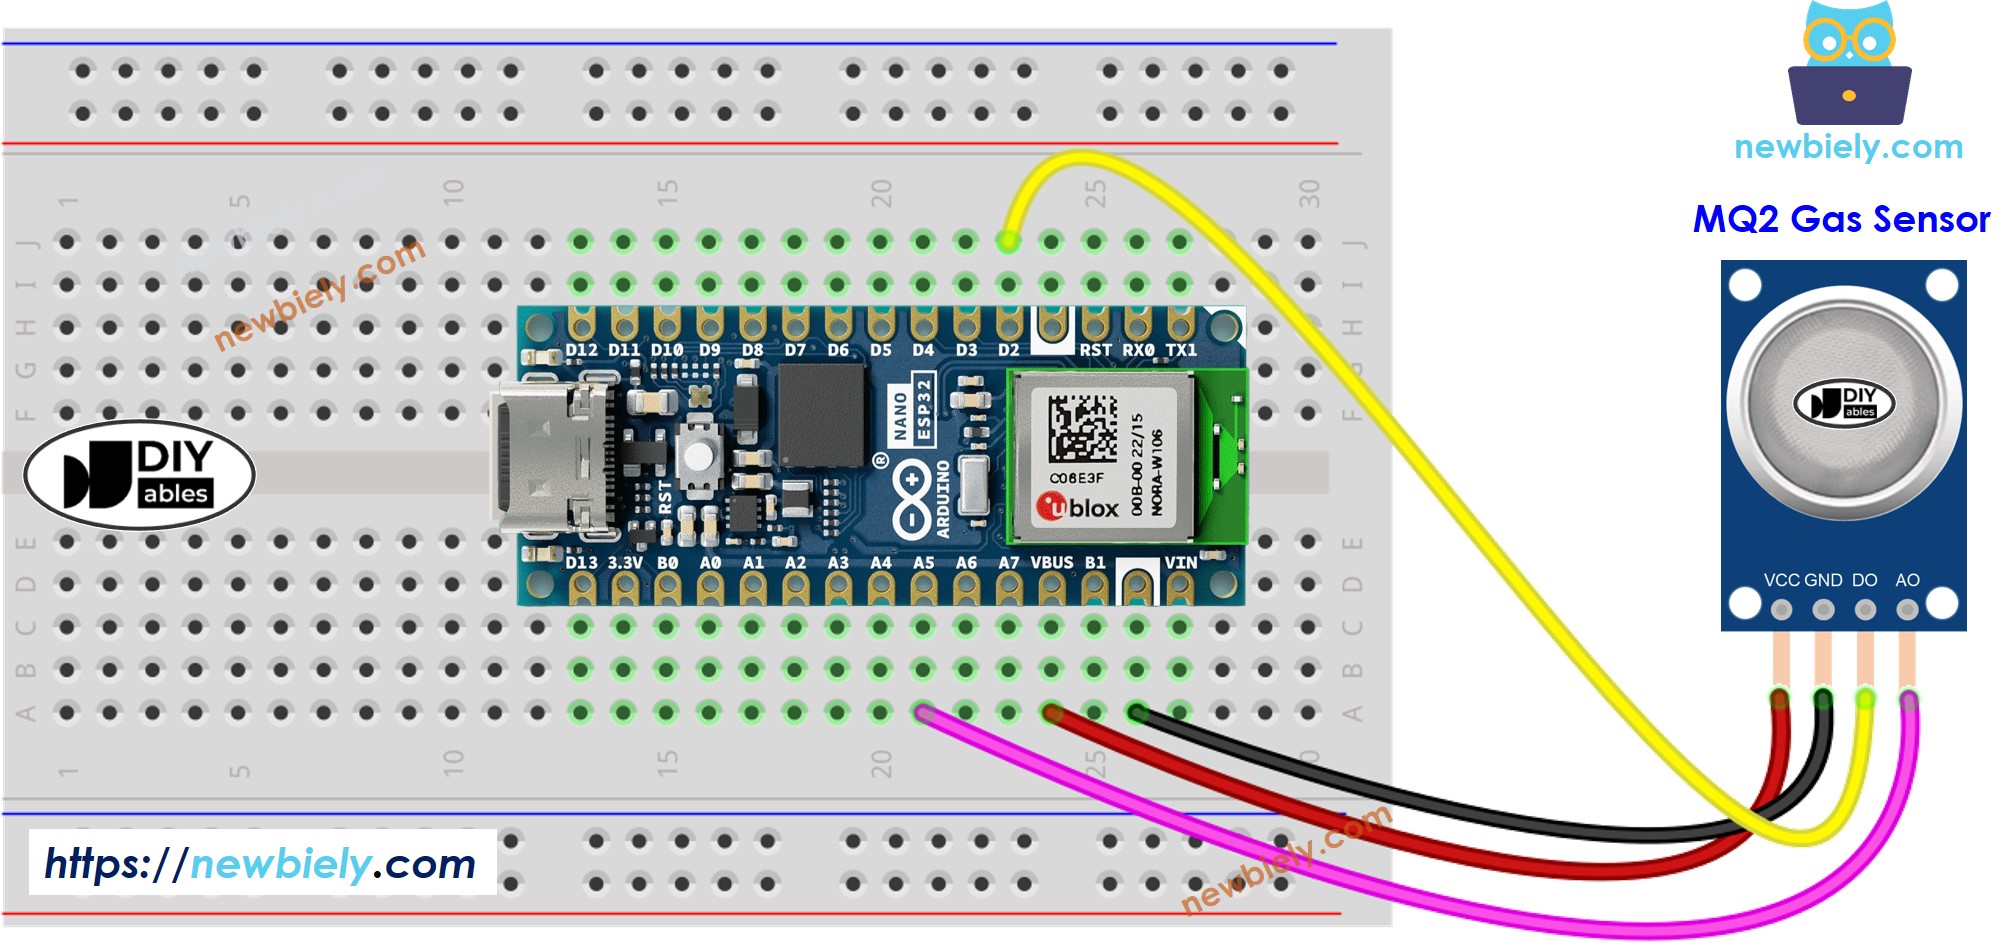 The wiring diagram between Arduino Nano ESP32 and MQ2 gas sensor